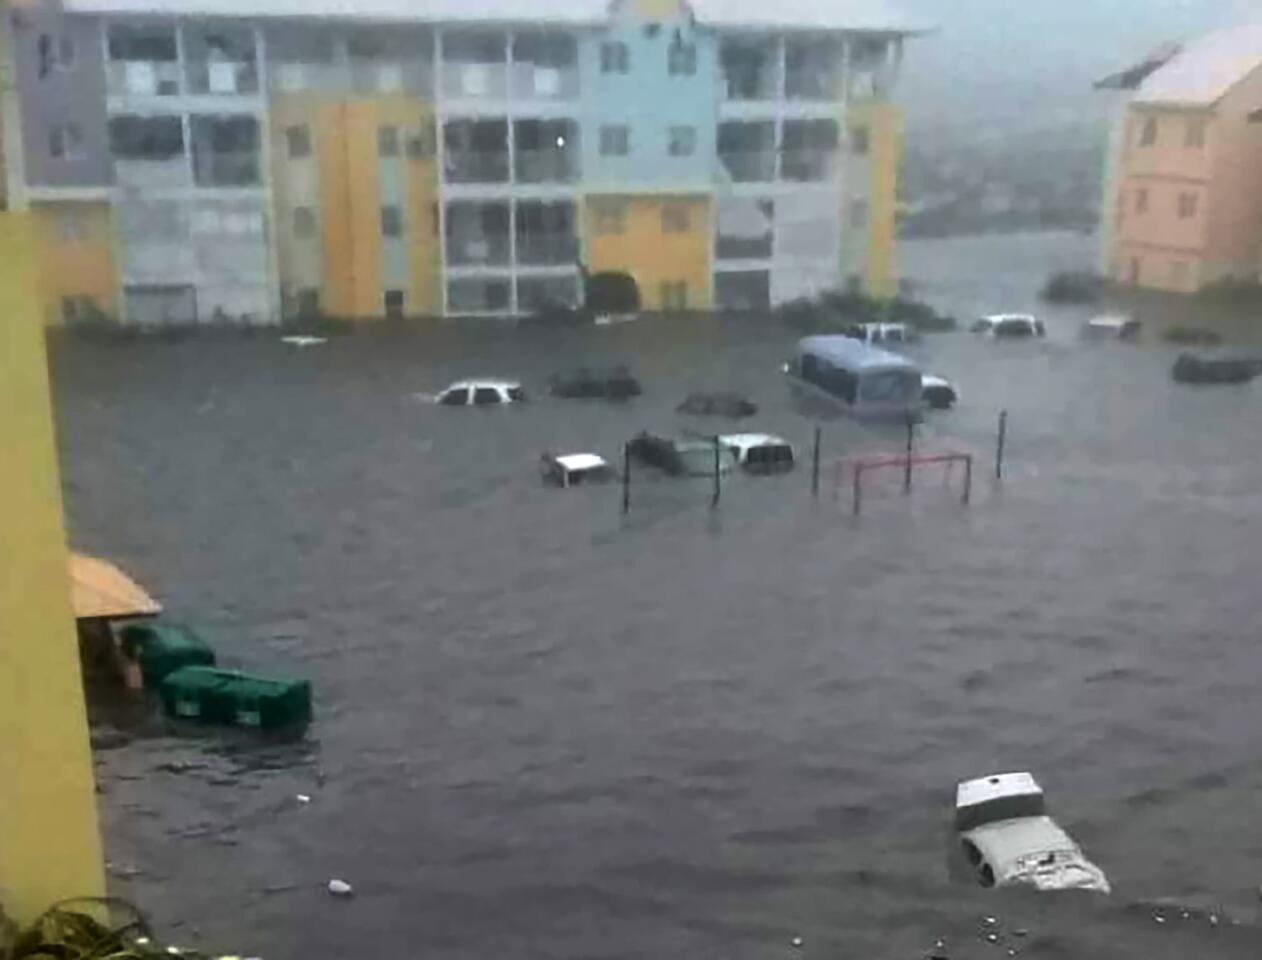 Hurricane Irma brings destruction to the Caribbean